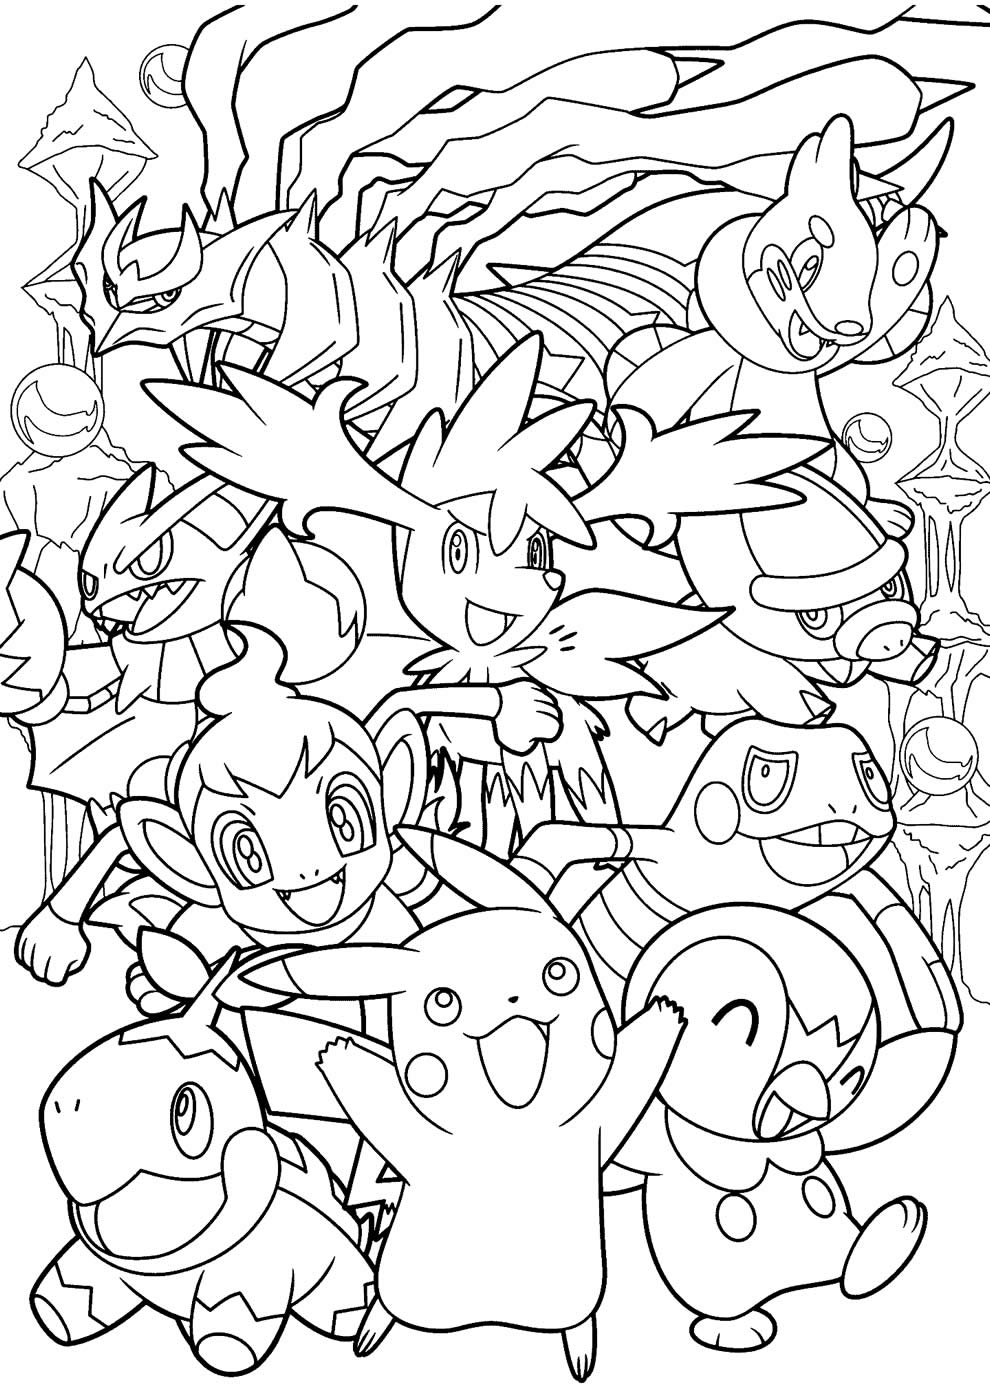 30 Desenhos do Pokemon para Colorir/Pintar!  Pokemon para colorir, Páginas  para colorir da disney, Pokémon desenho